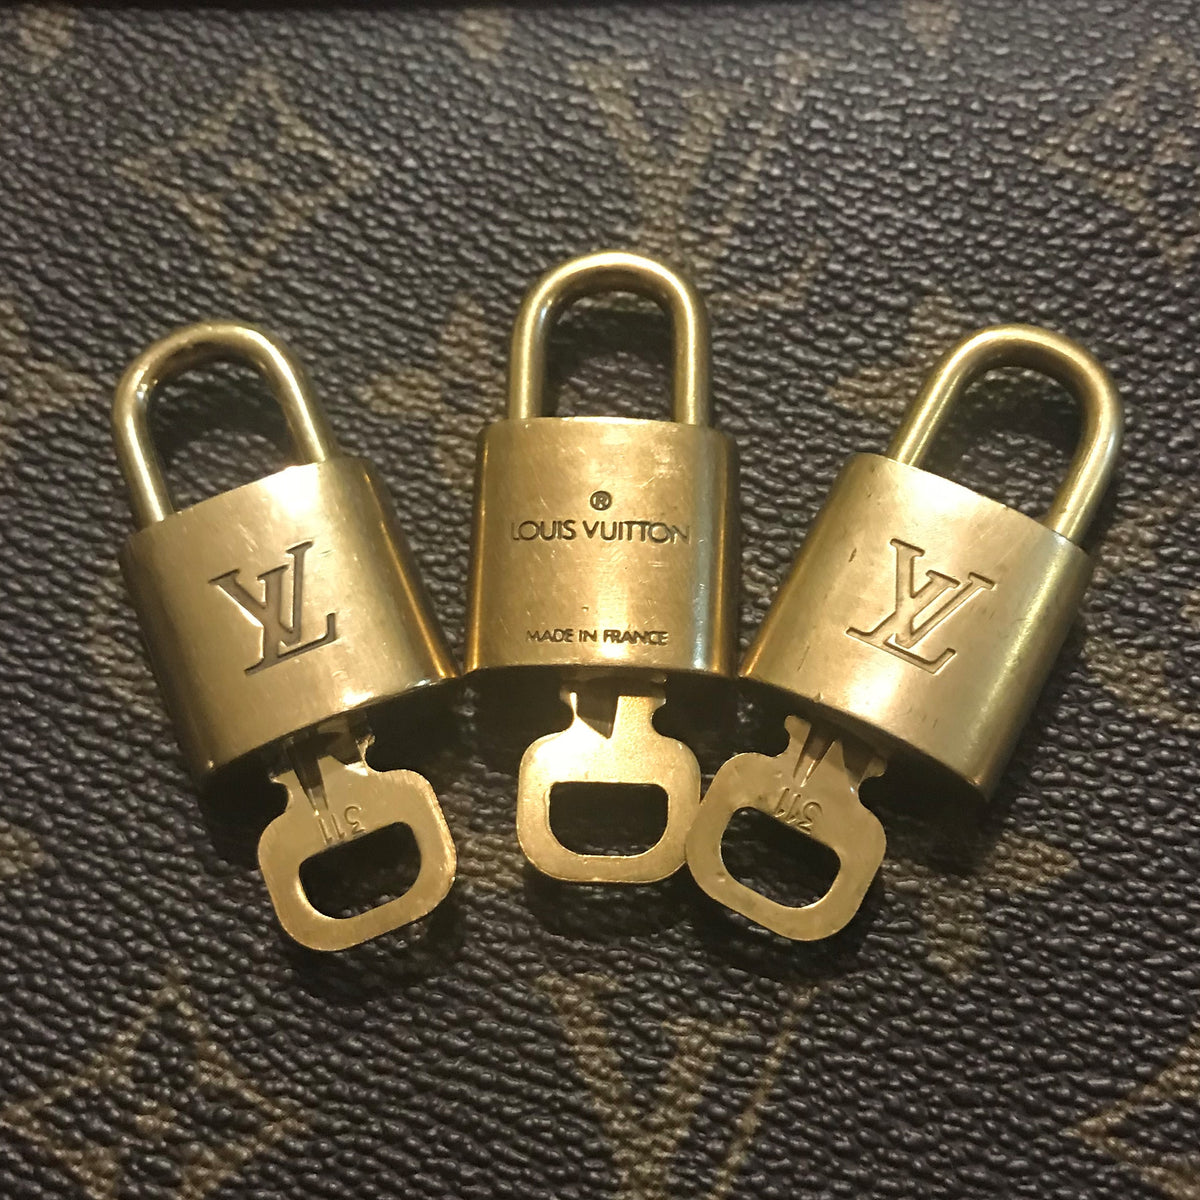 Louis Vuitton Padlock and Key - Vilma's Vault